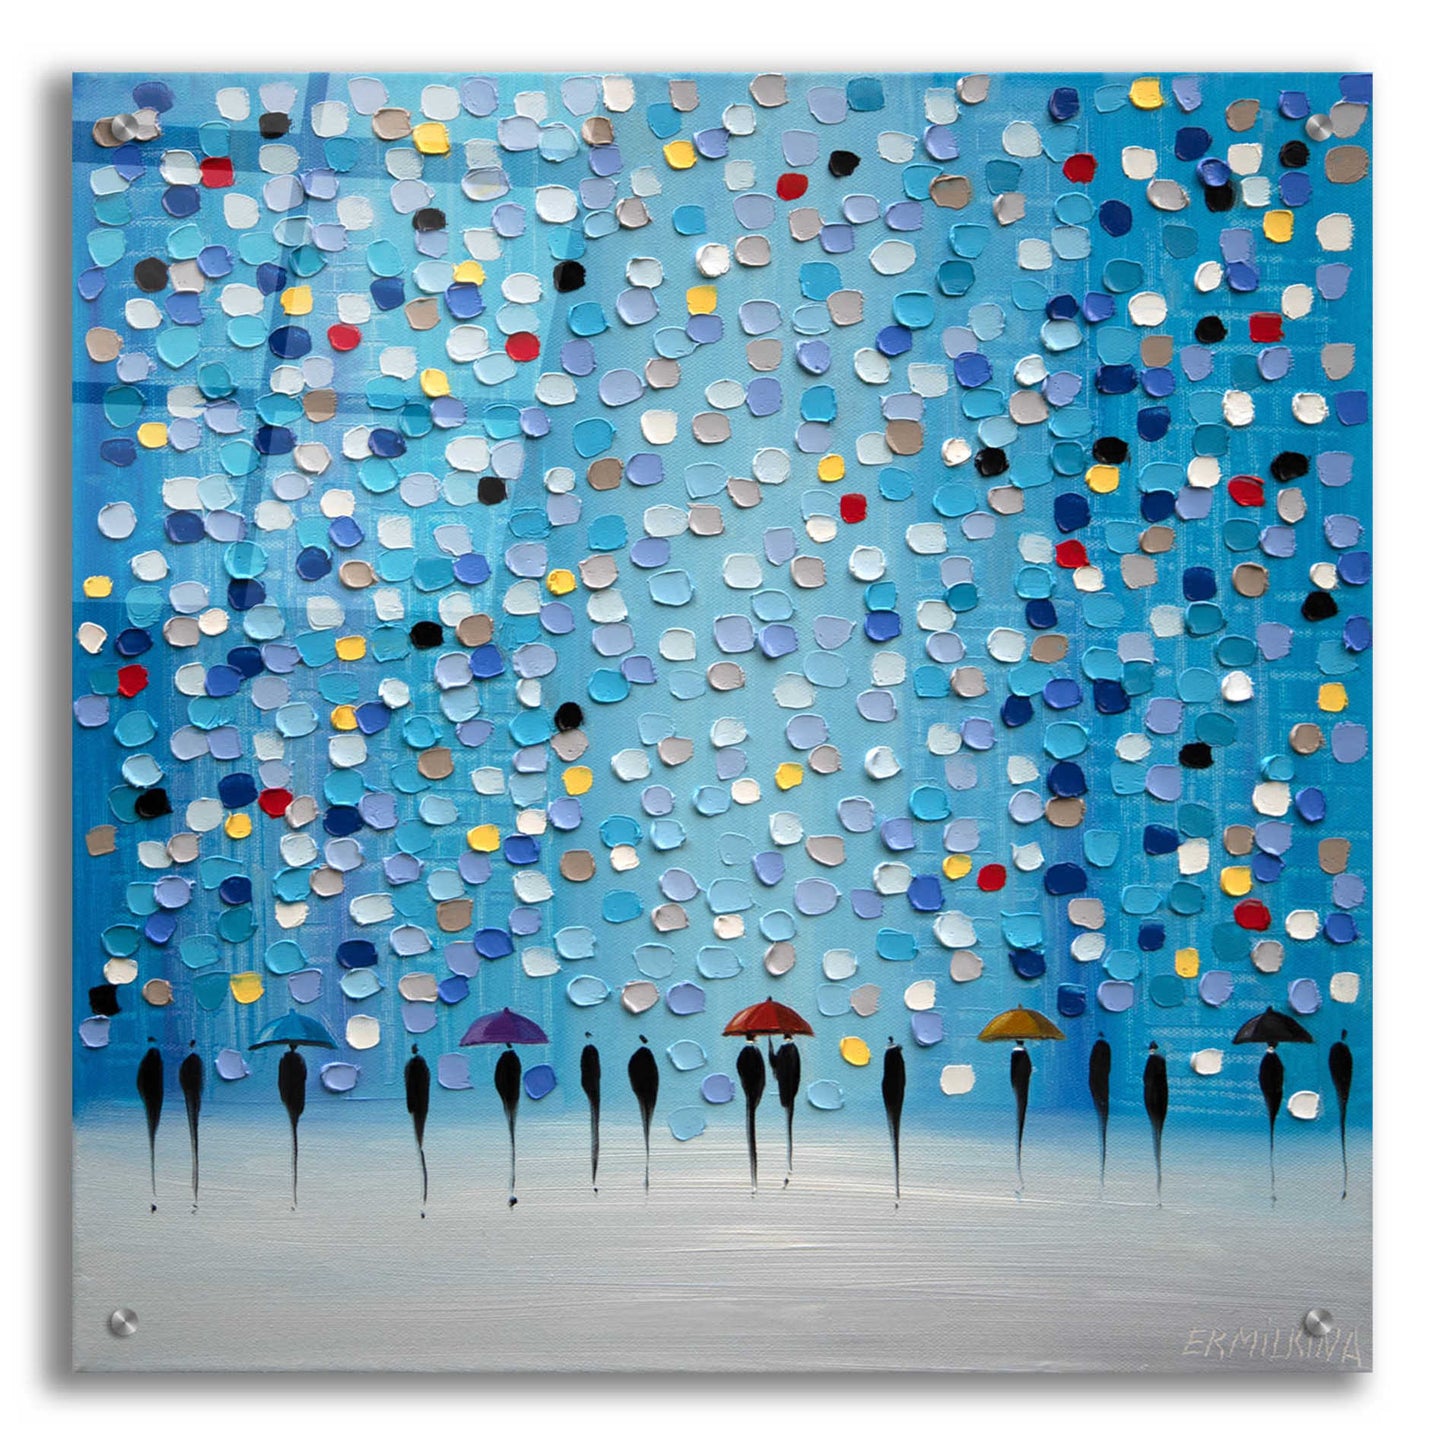 Epic Art 'Colorful City Umbrellas' by Ekaterina Ermilkina Acrylic Glass Wall Art,24x24